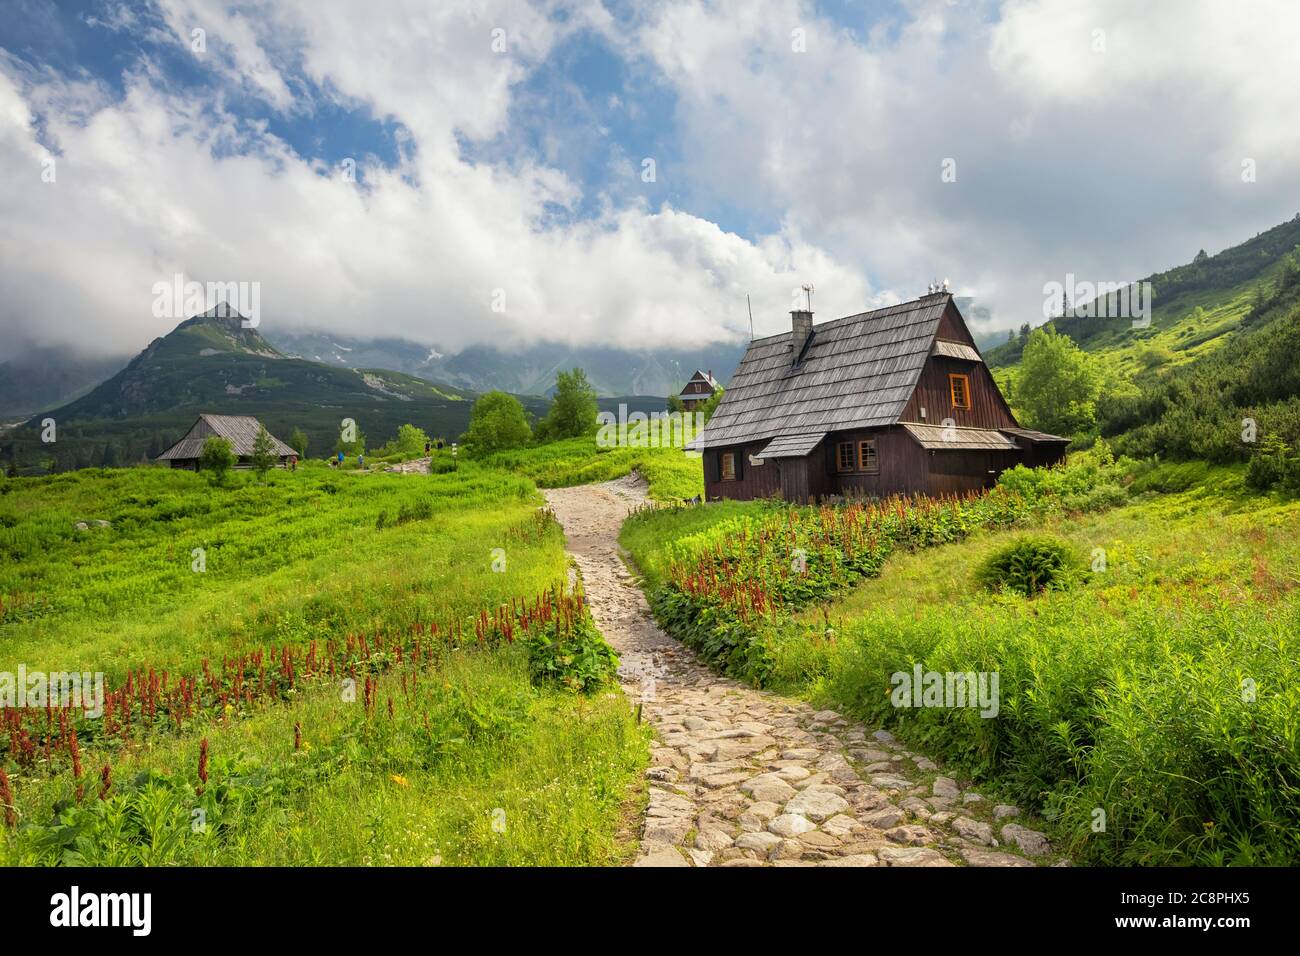 Wooden huts in Gasienicowa Valley (Dolina Gasienicowa), Tatra Mountains, Poland Stock Photo